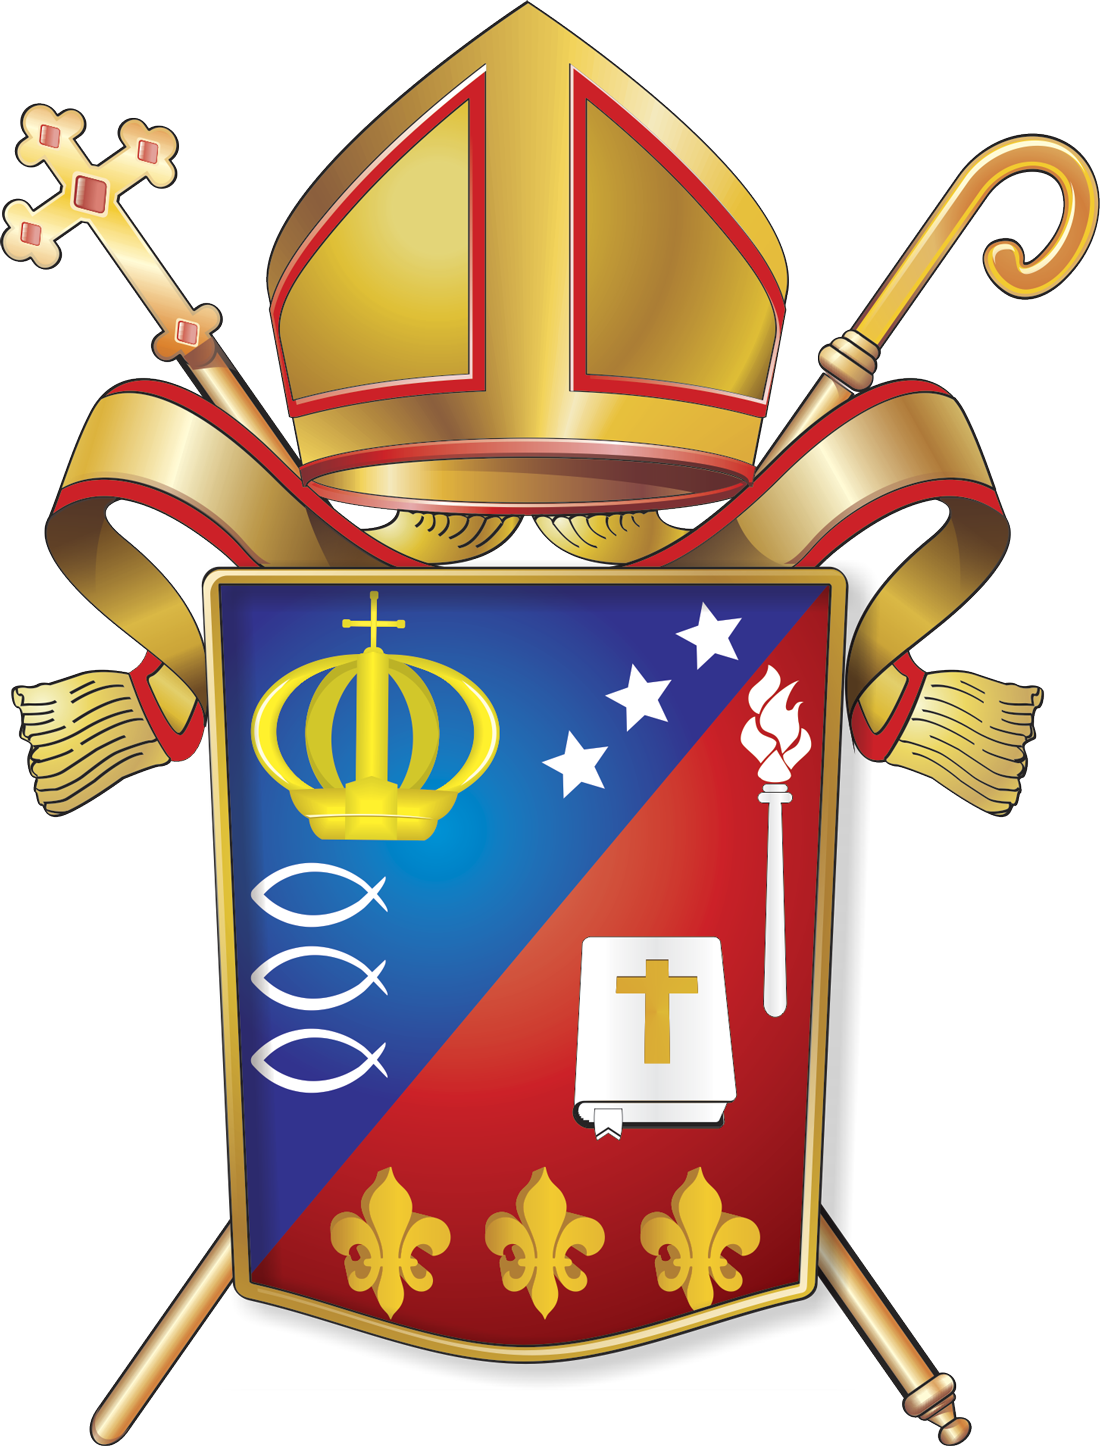 Encerramento da conta do twitter - Diocese de Catanduva